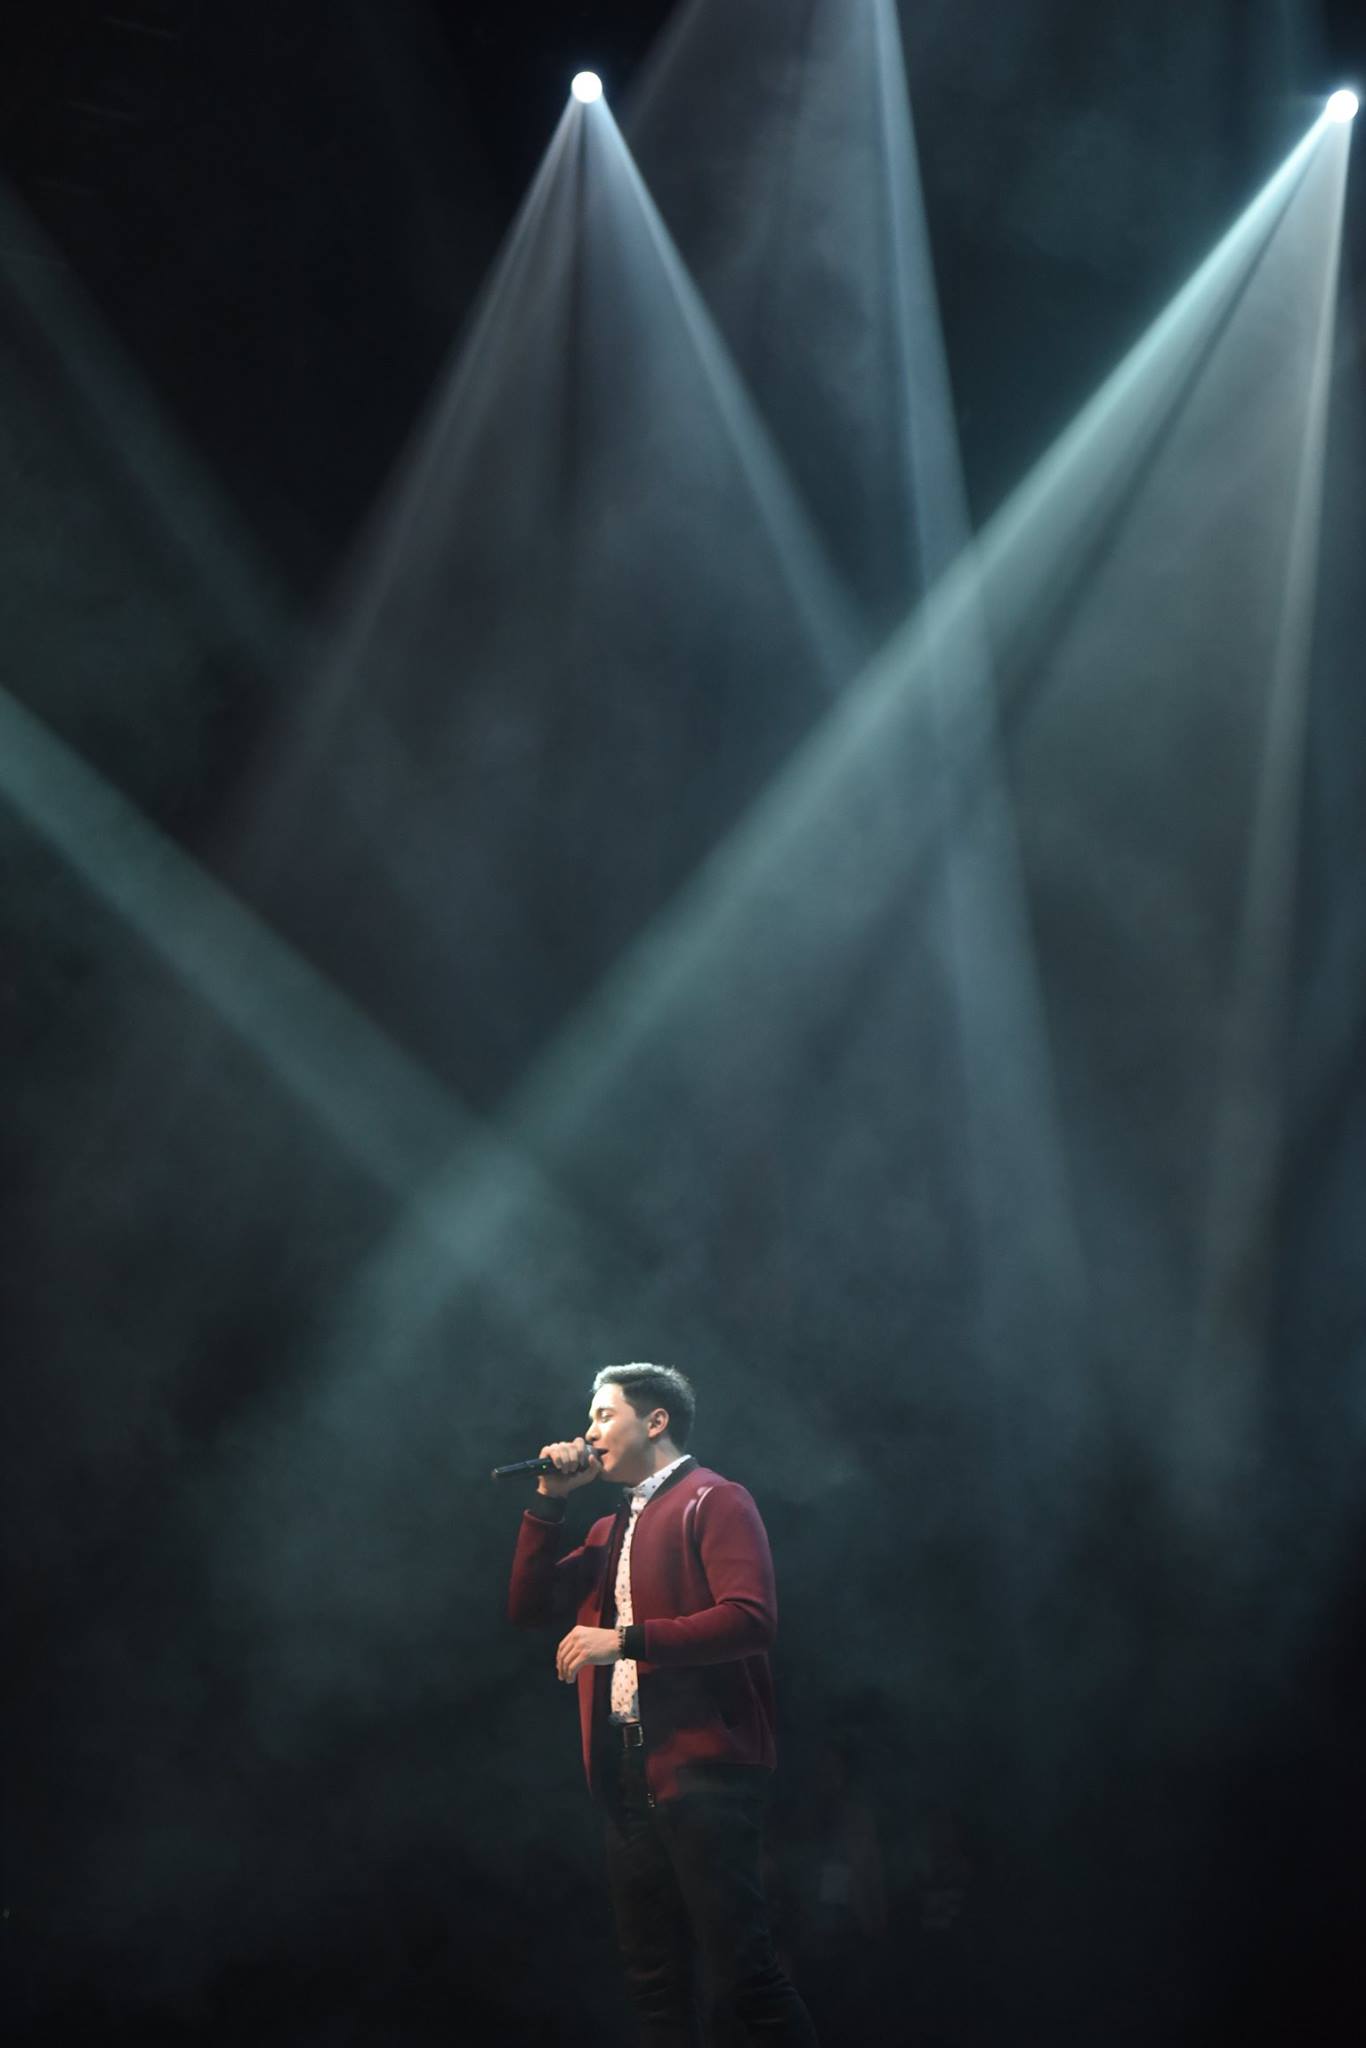 alden richards with lights on stage singing hosting concert in singapore pinoy celebrity hottest